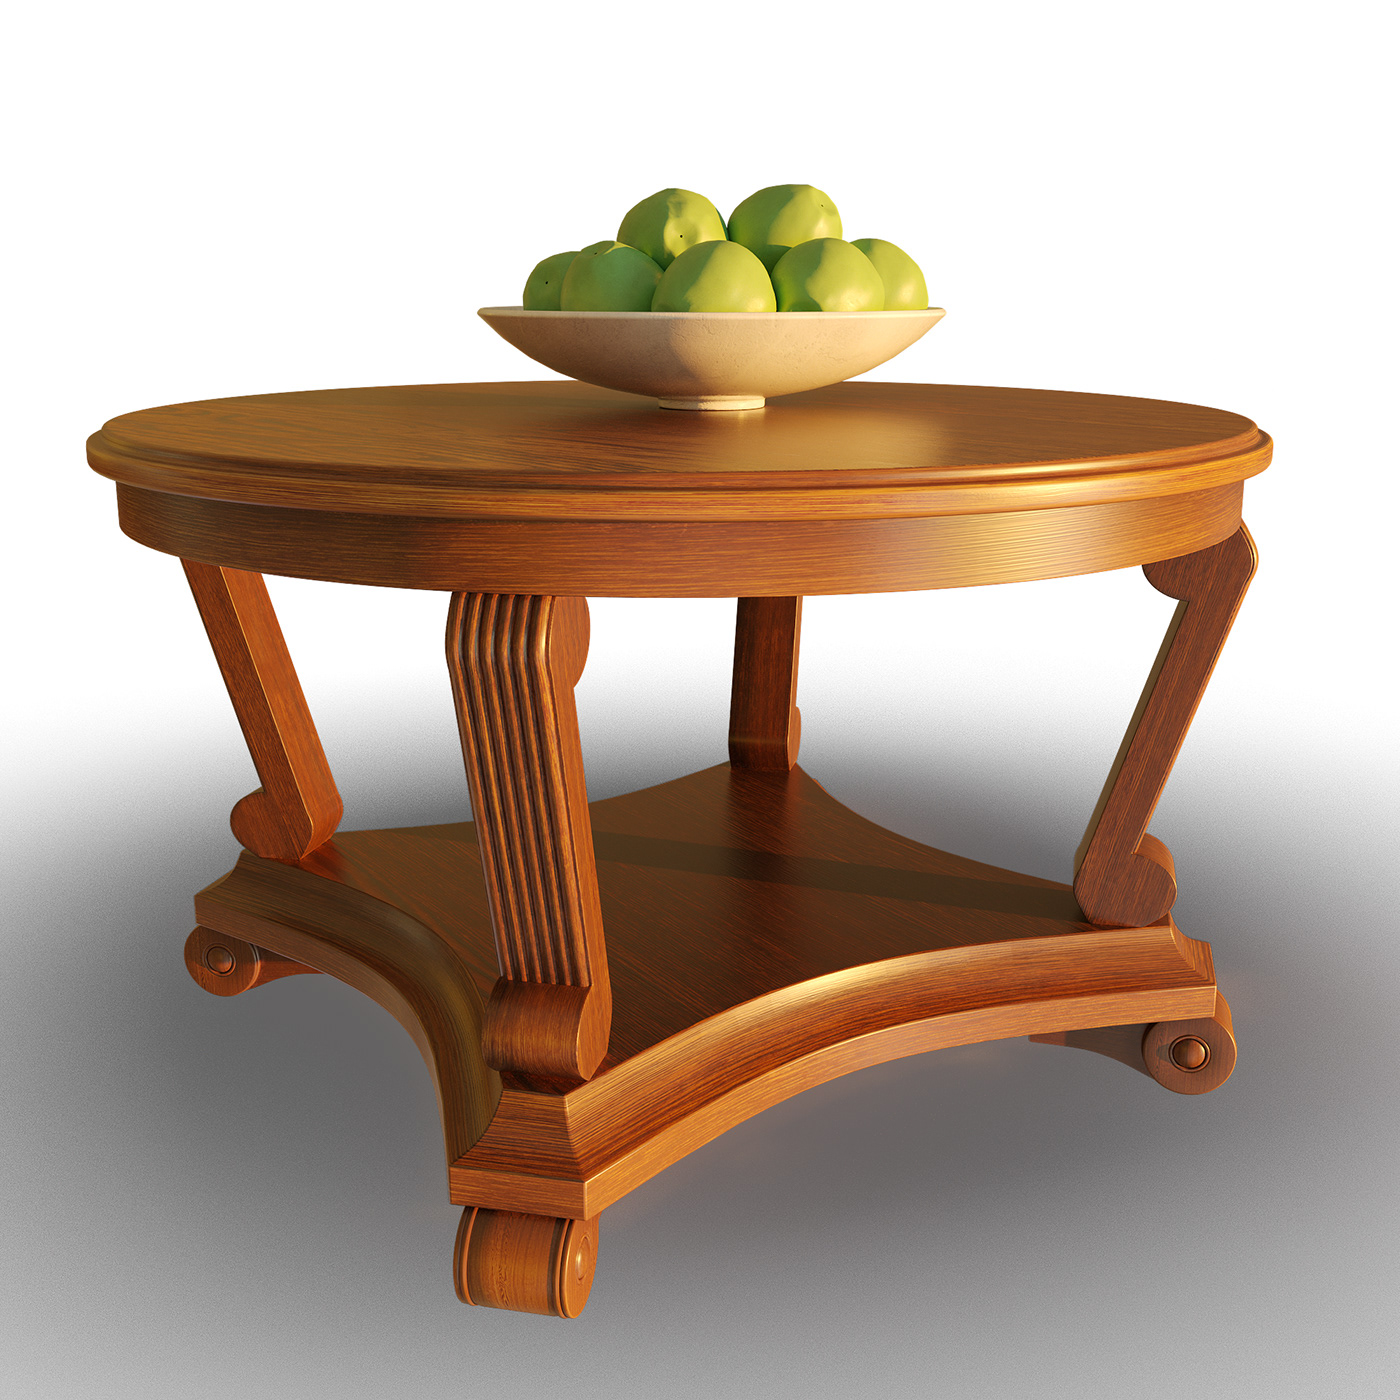 3d modeling 3ds max apple modern Render table visualization wood